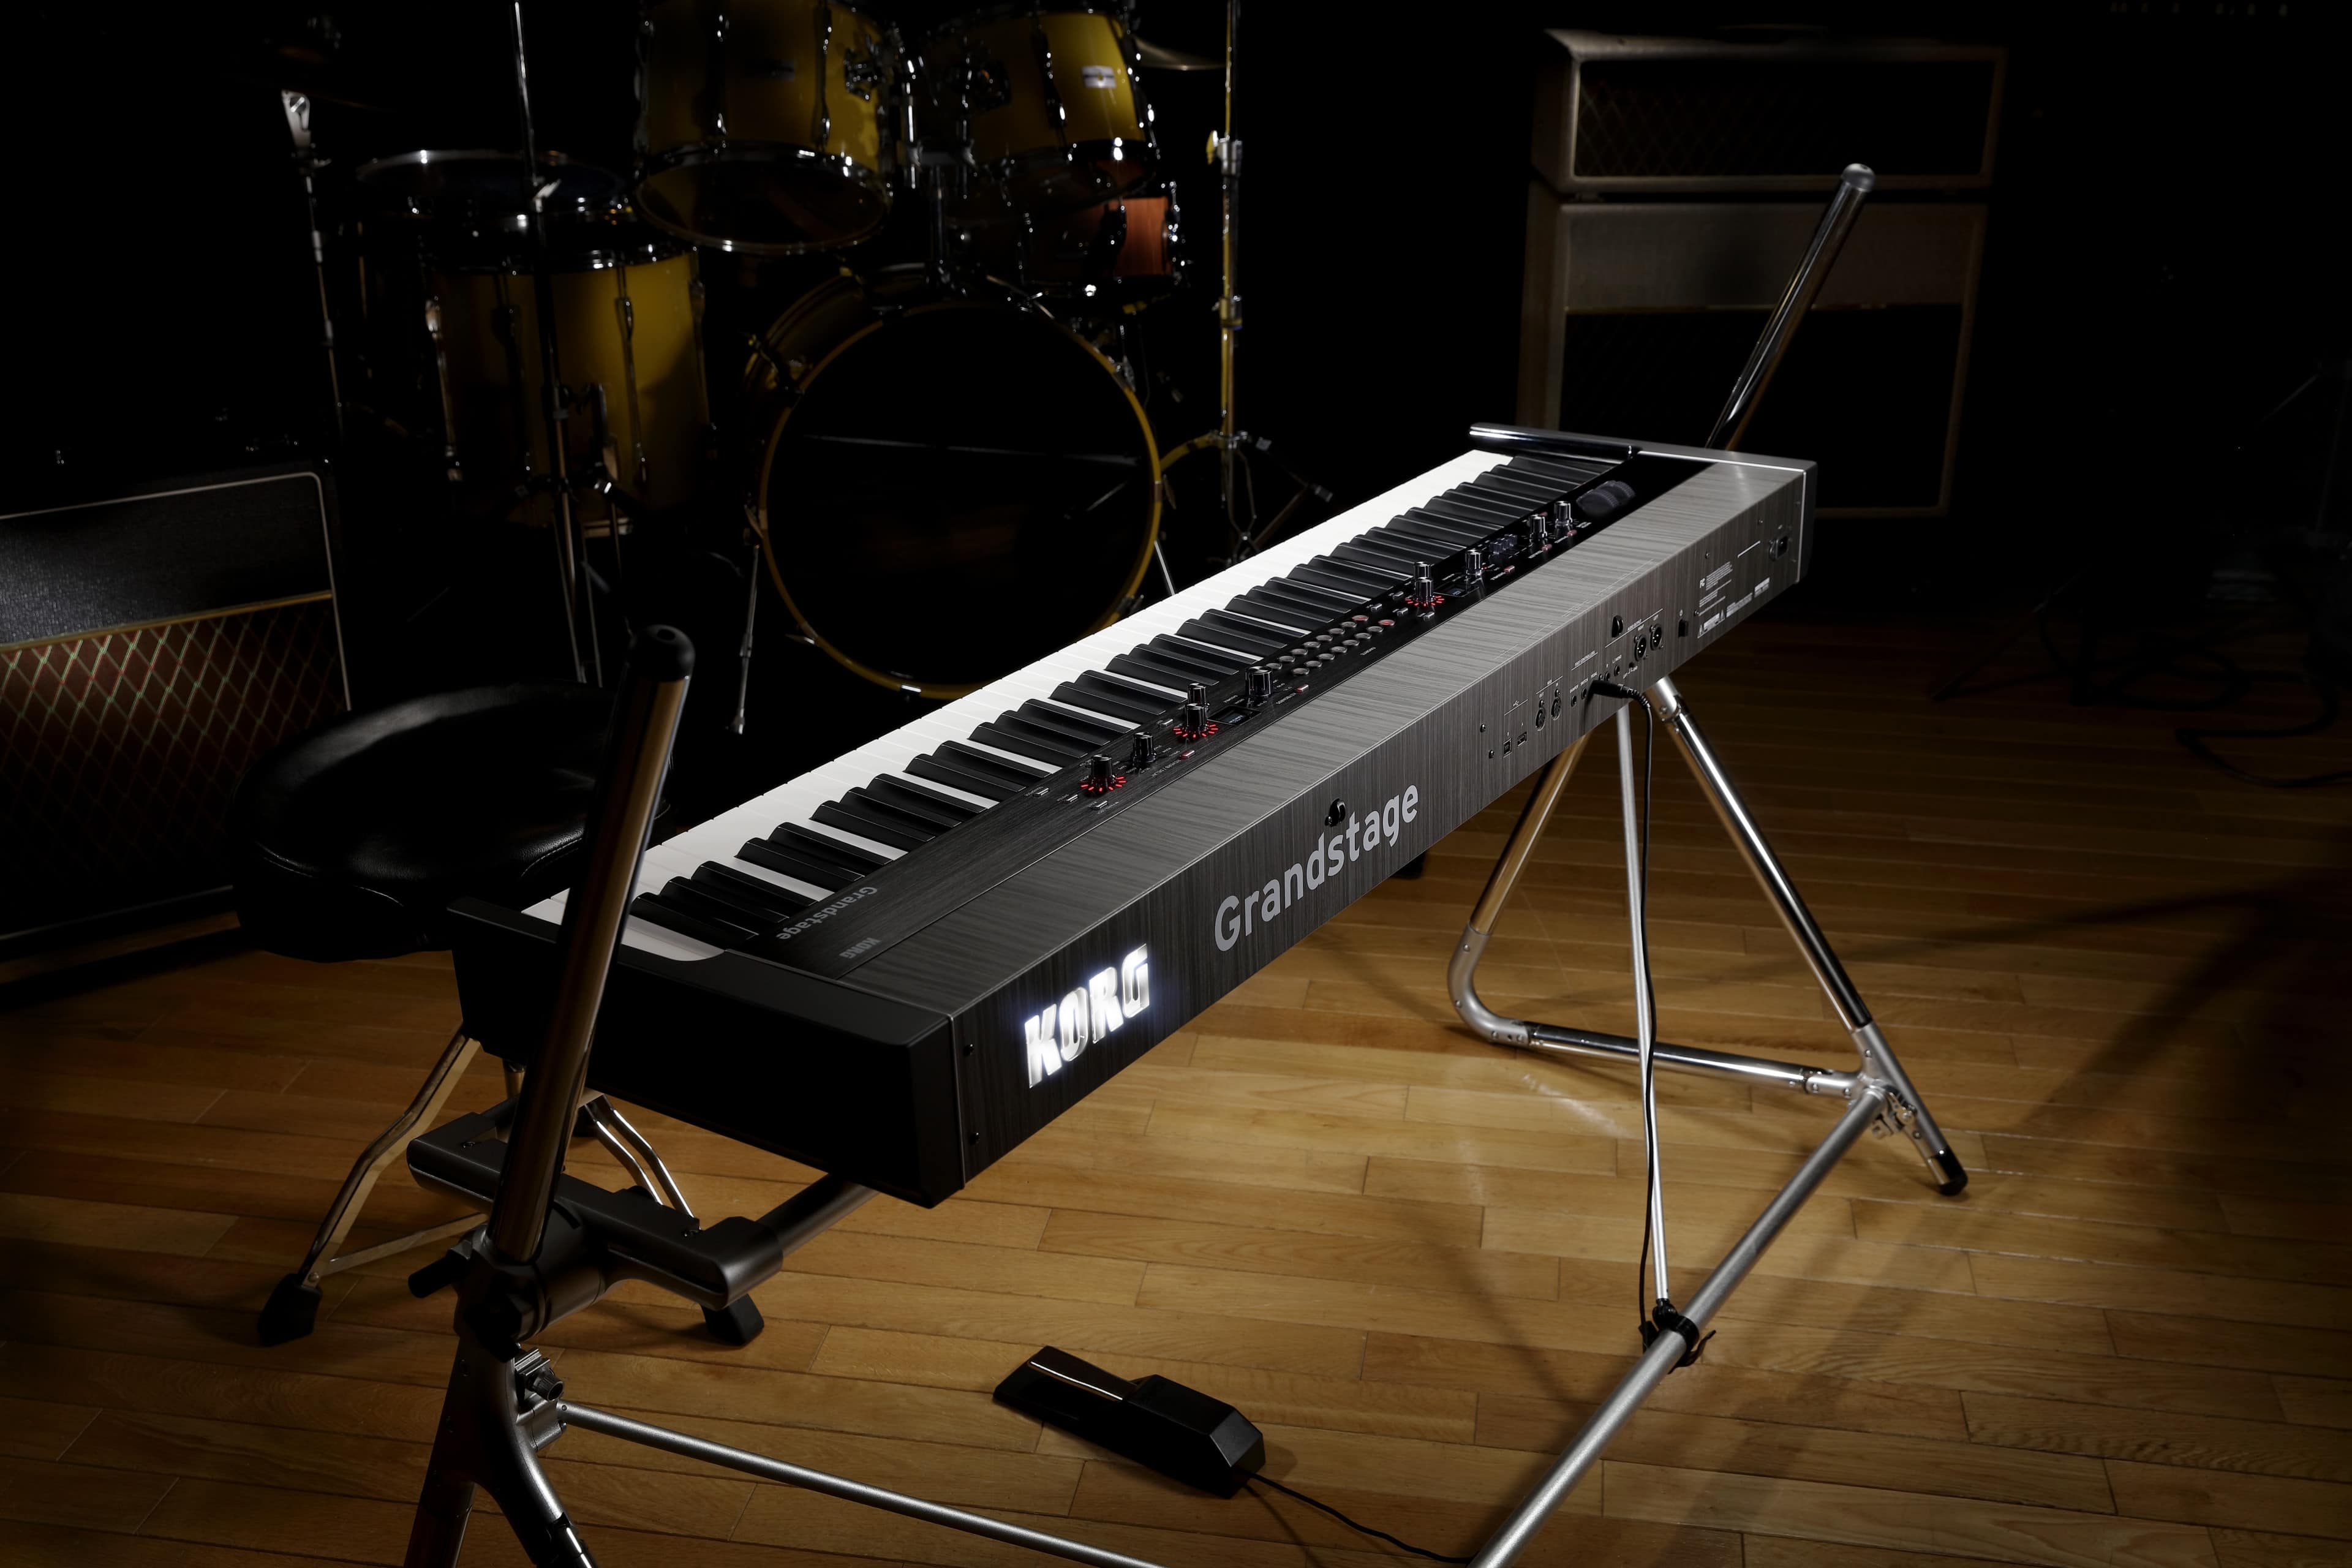 Korg Grandstage Keyboard Equipment Review